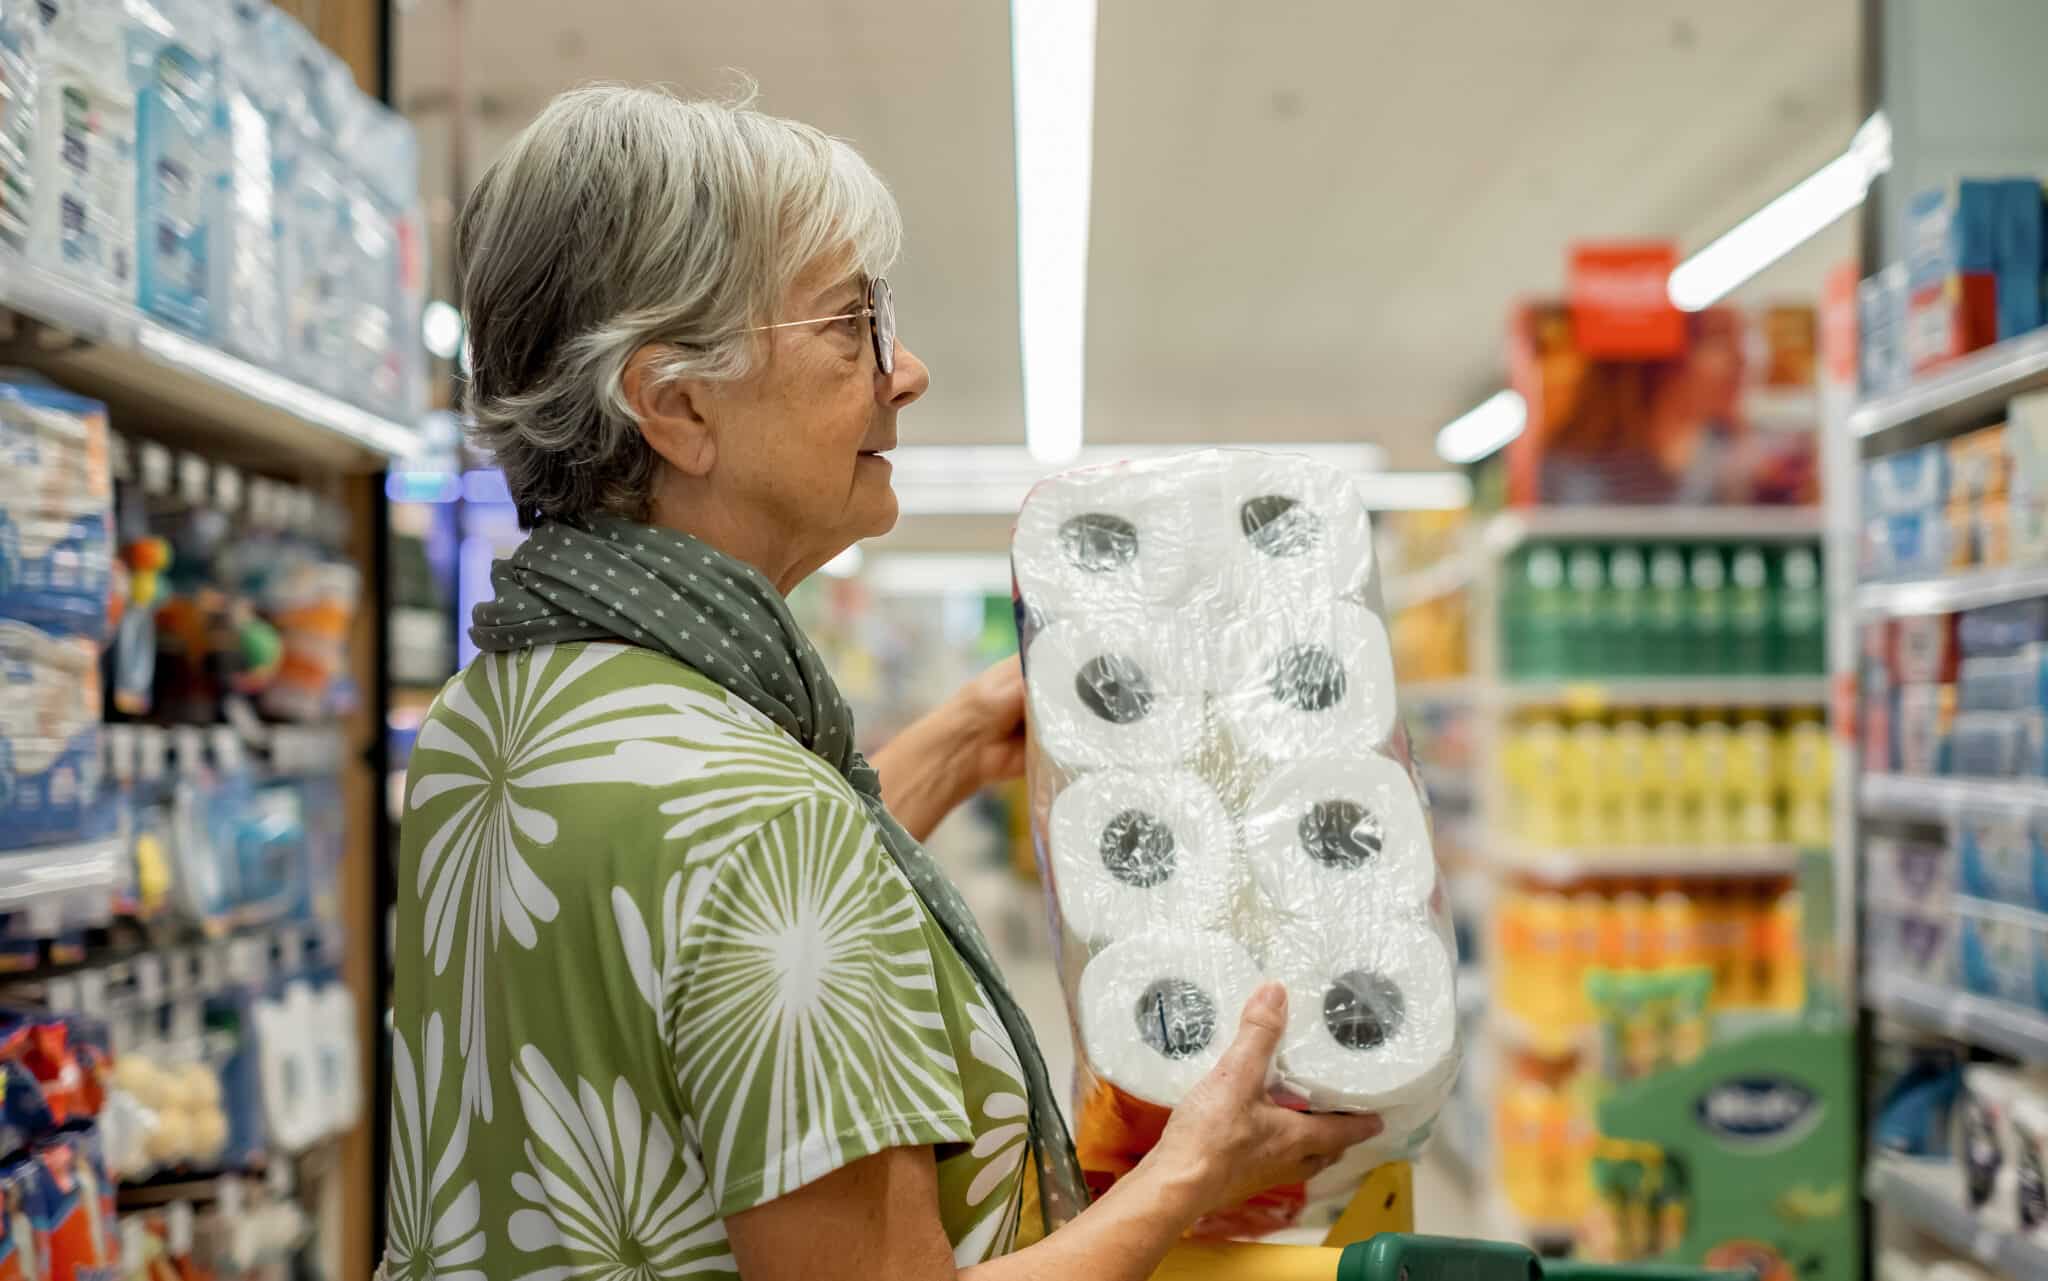 Riverside-CMG-senior-woman-shopping-in-supermarket-inflation-concept.jpeg